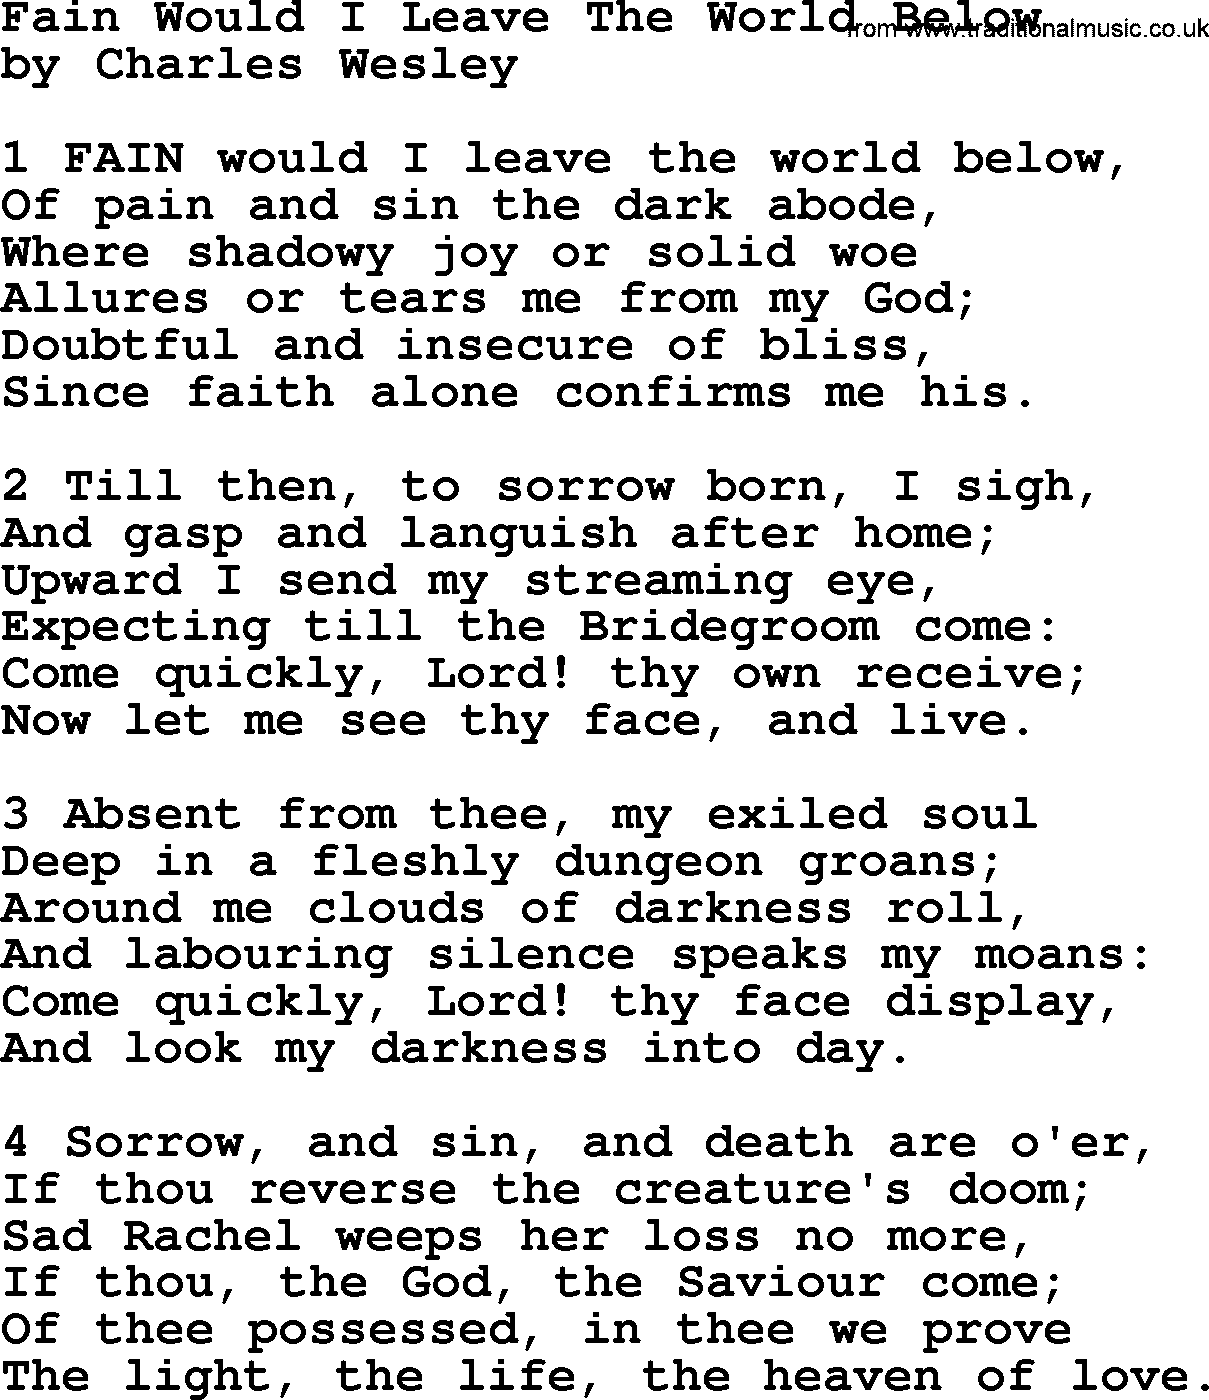 Charles Wesley hymn: Fain Would I Leave The World Below, lyrics